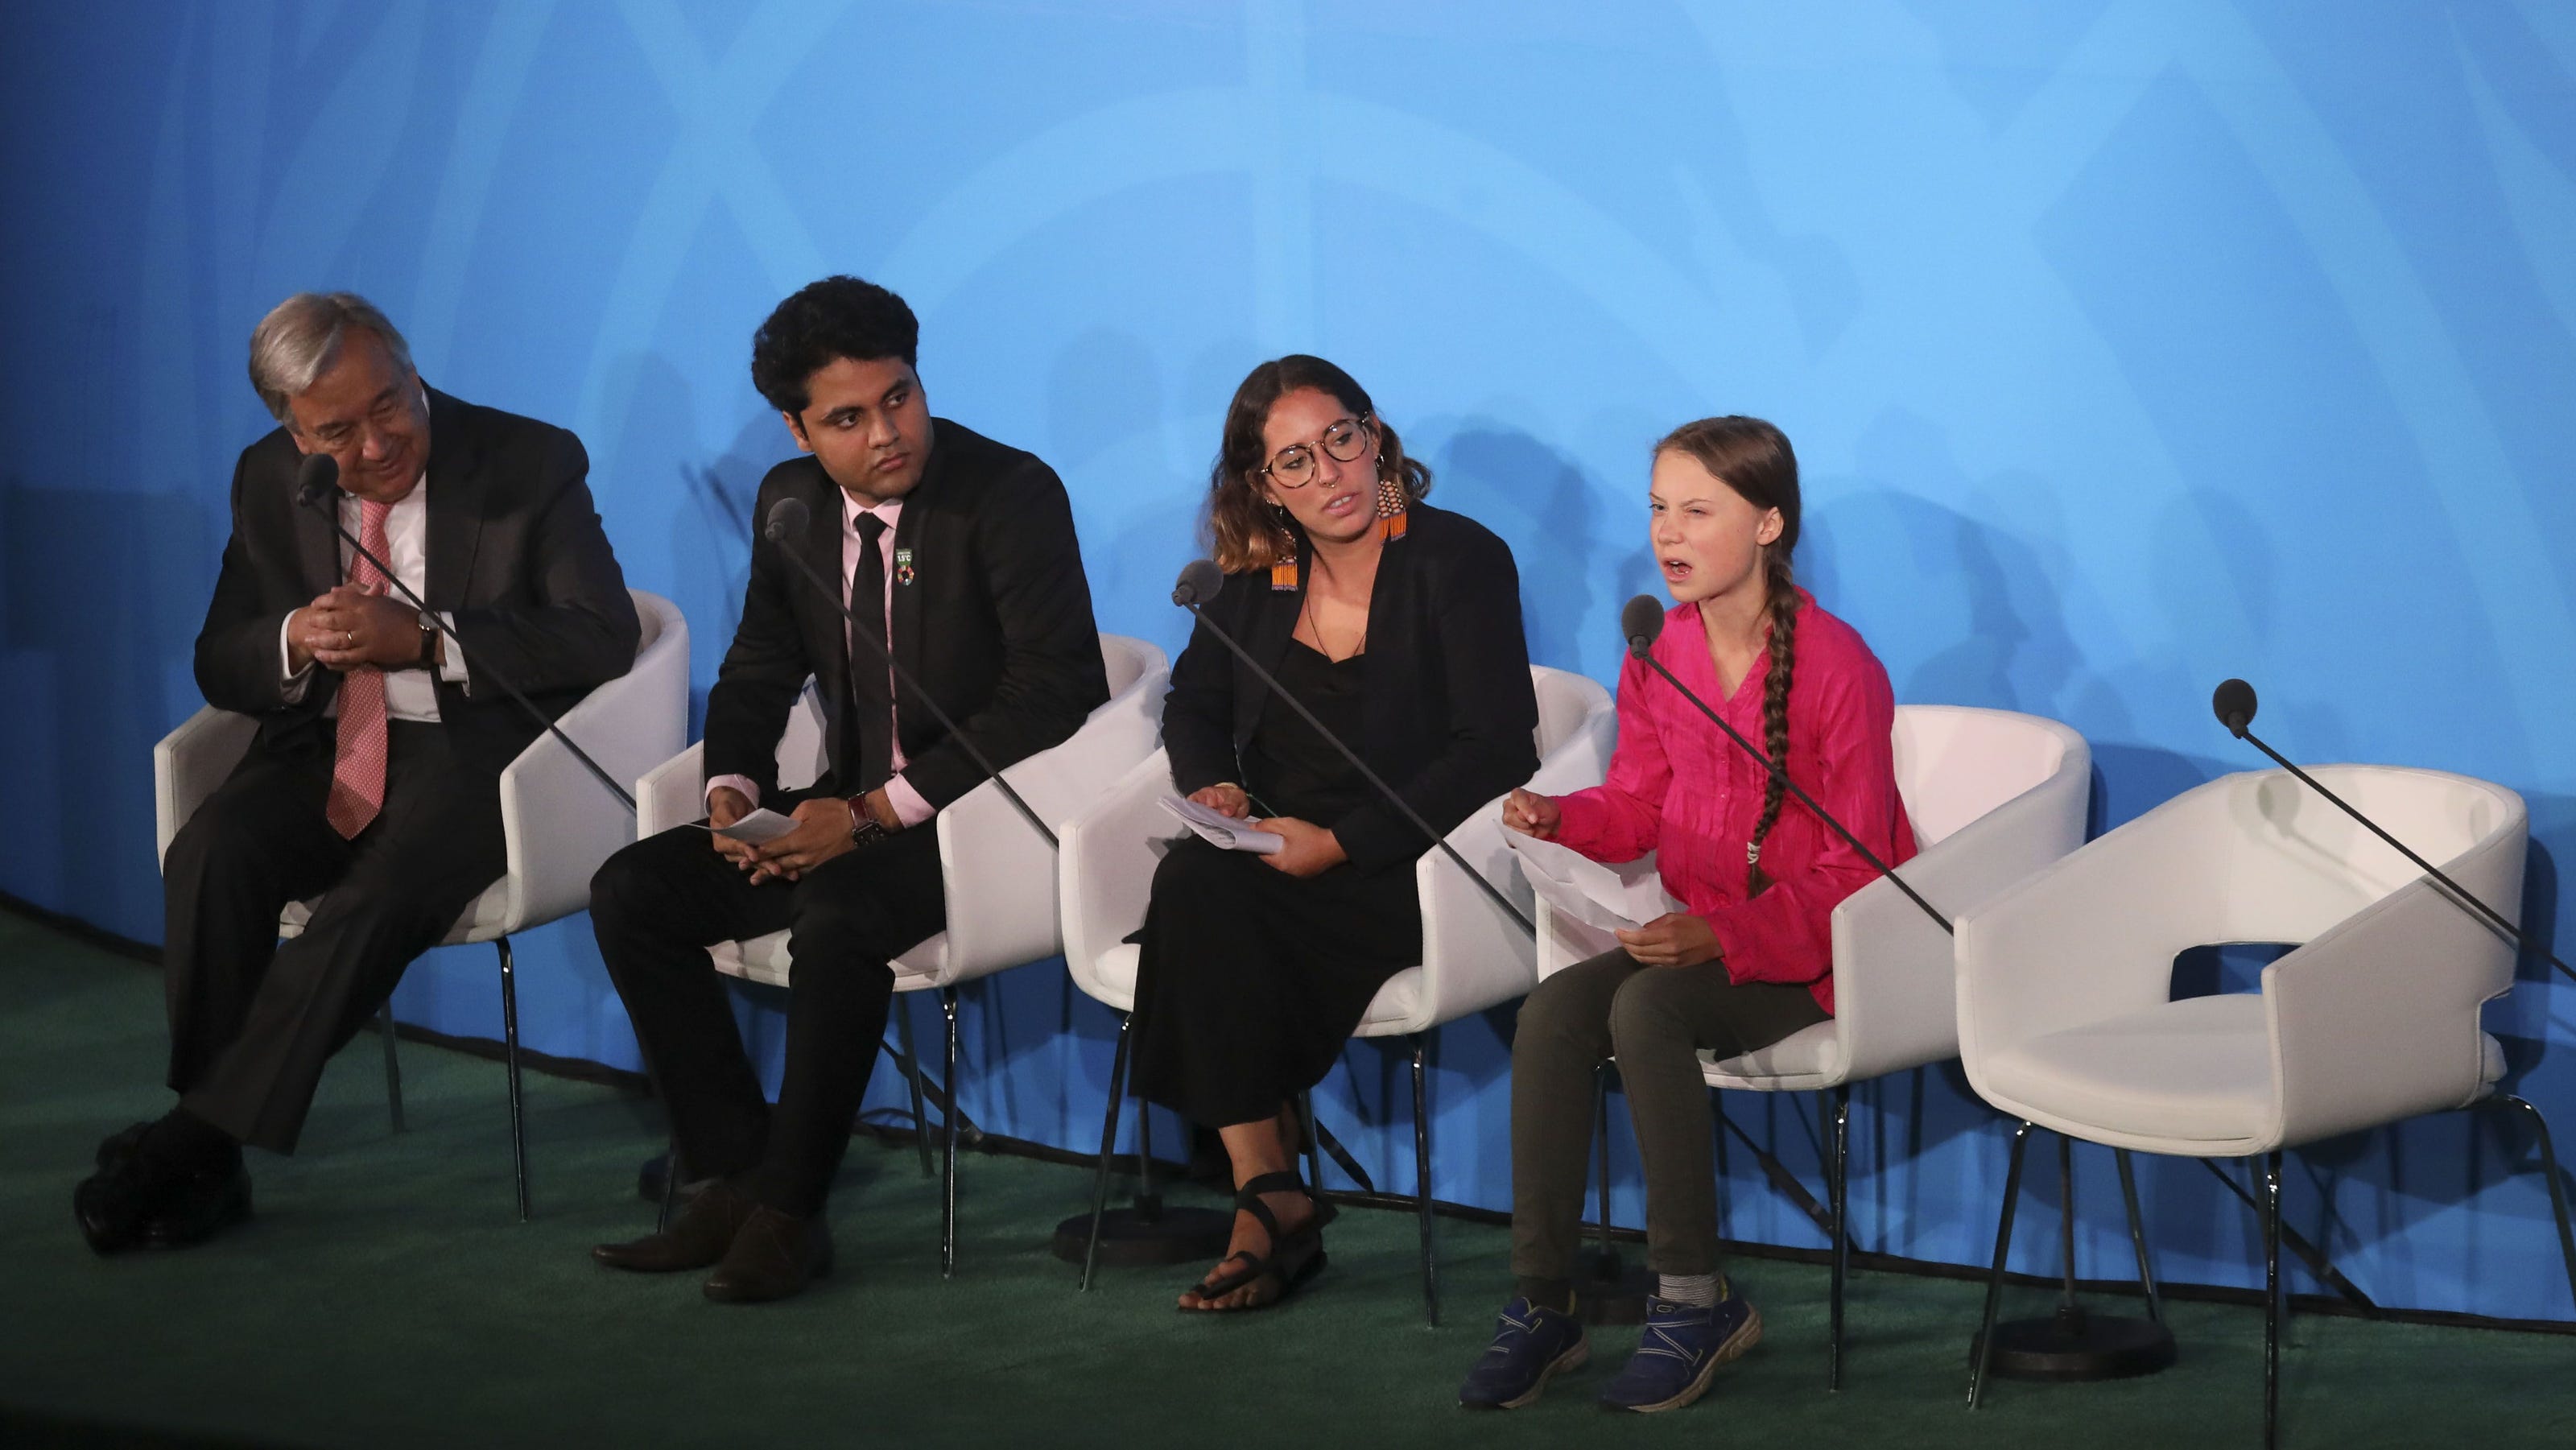 Greta Thunberg speech at UN climate change summit How dare you?